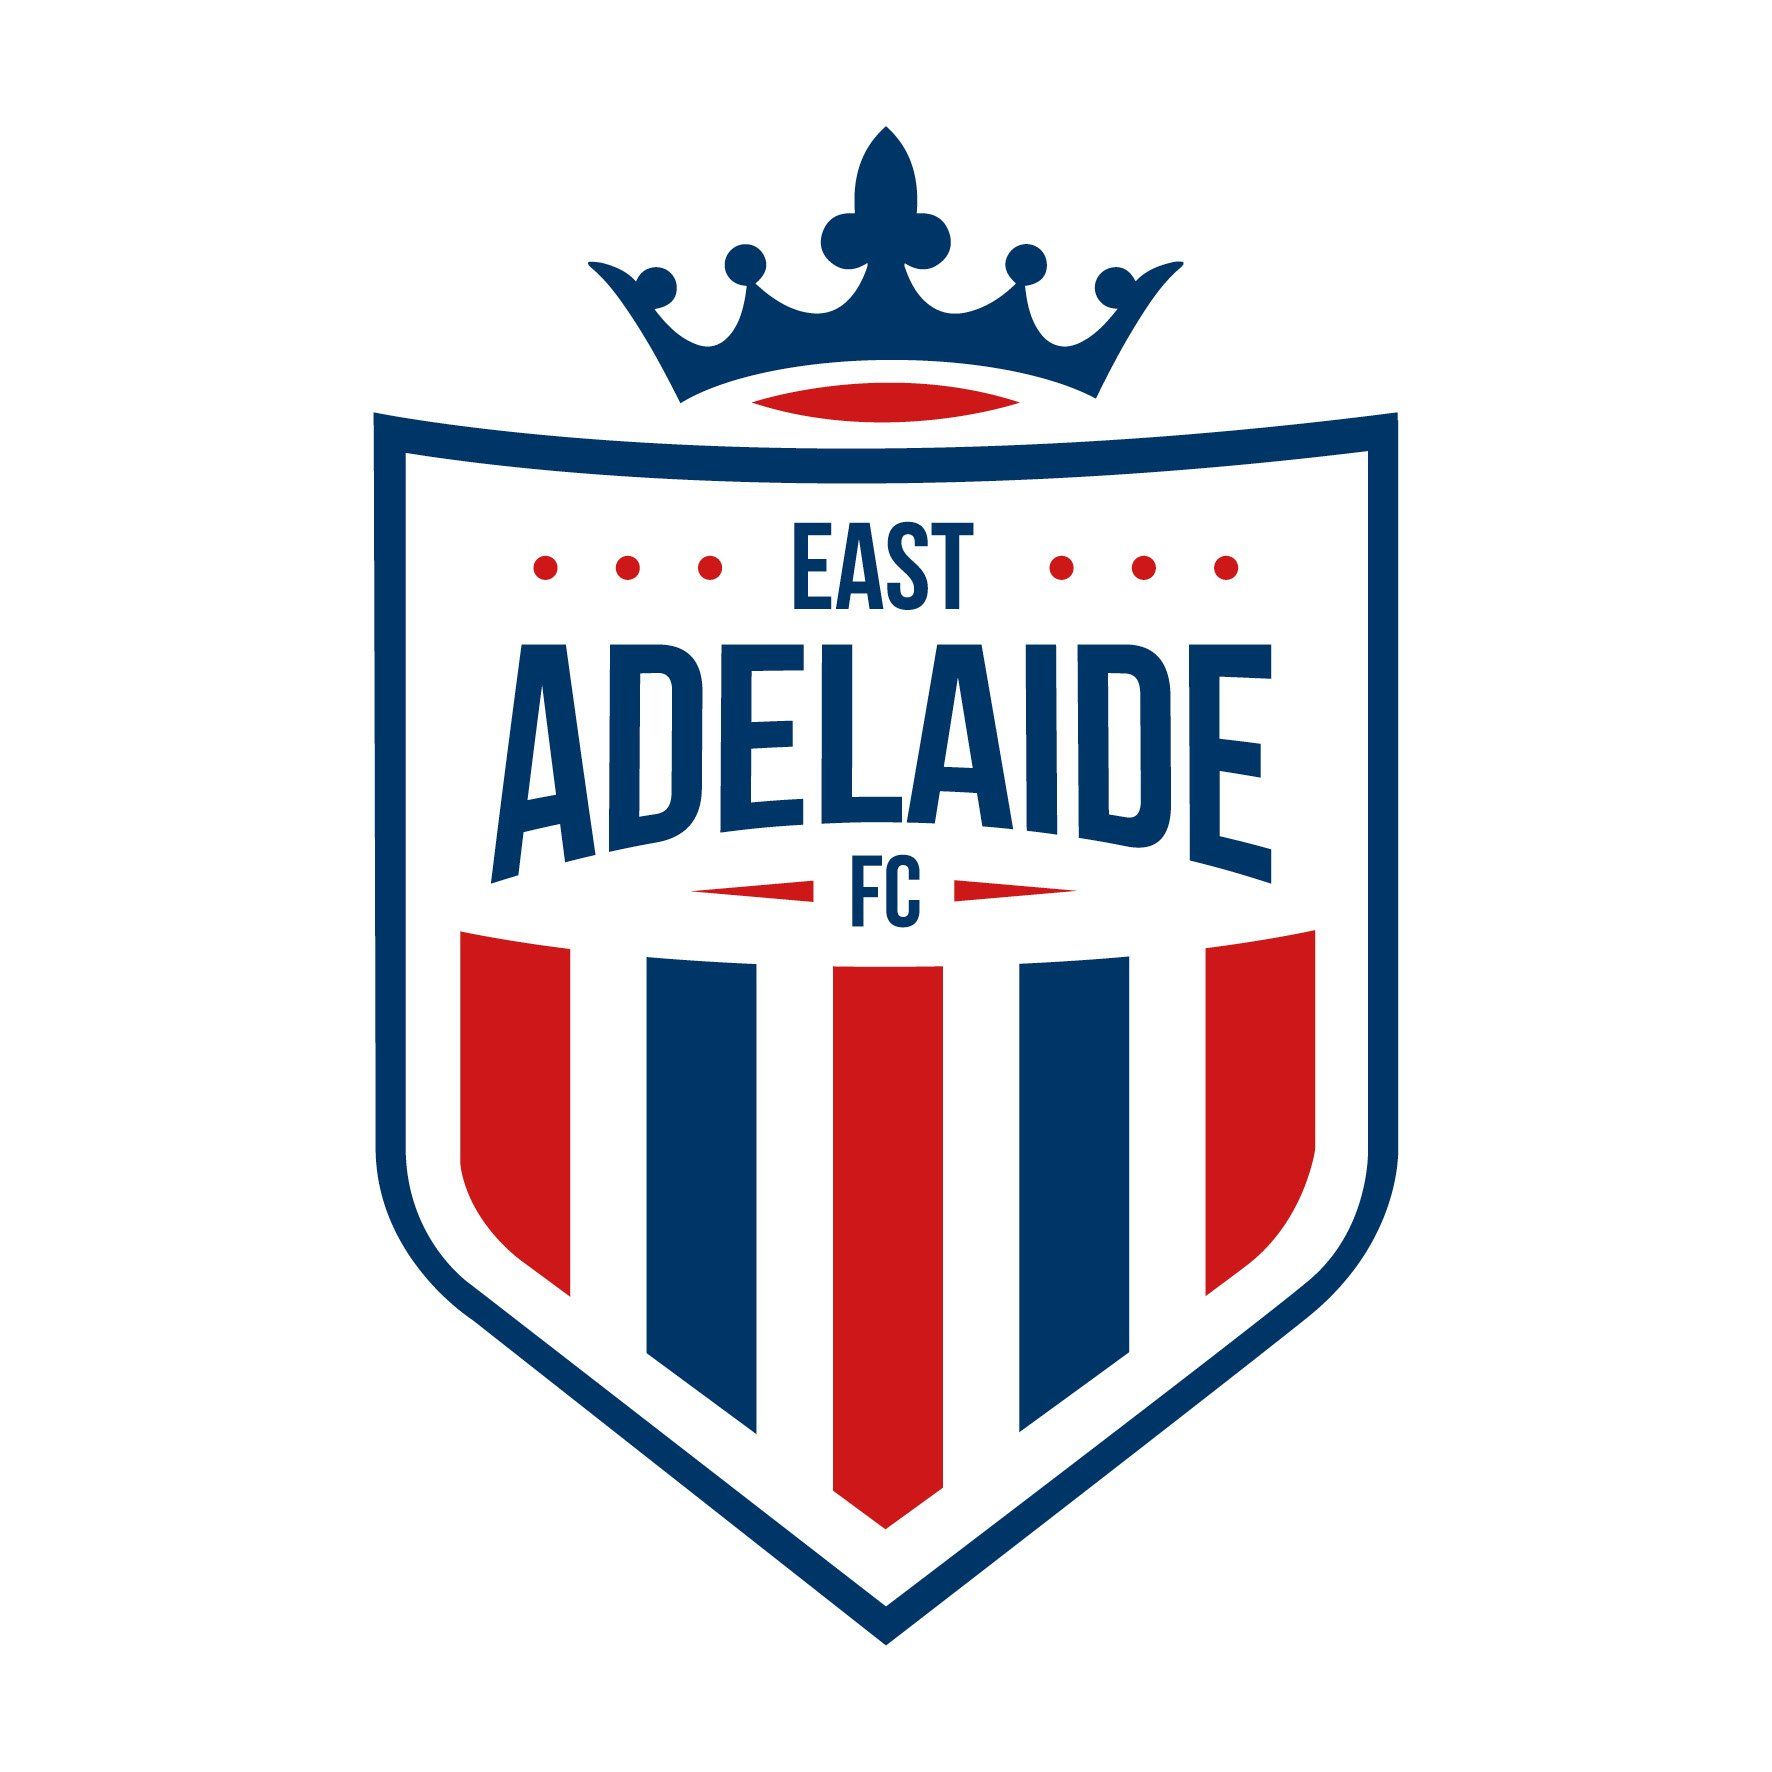 East Adelaide Football Club